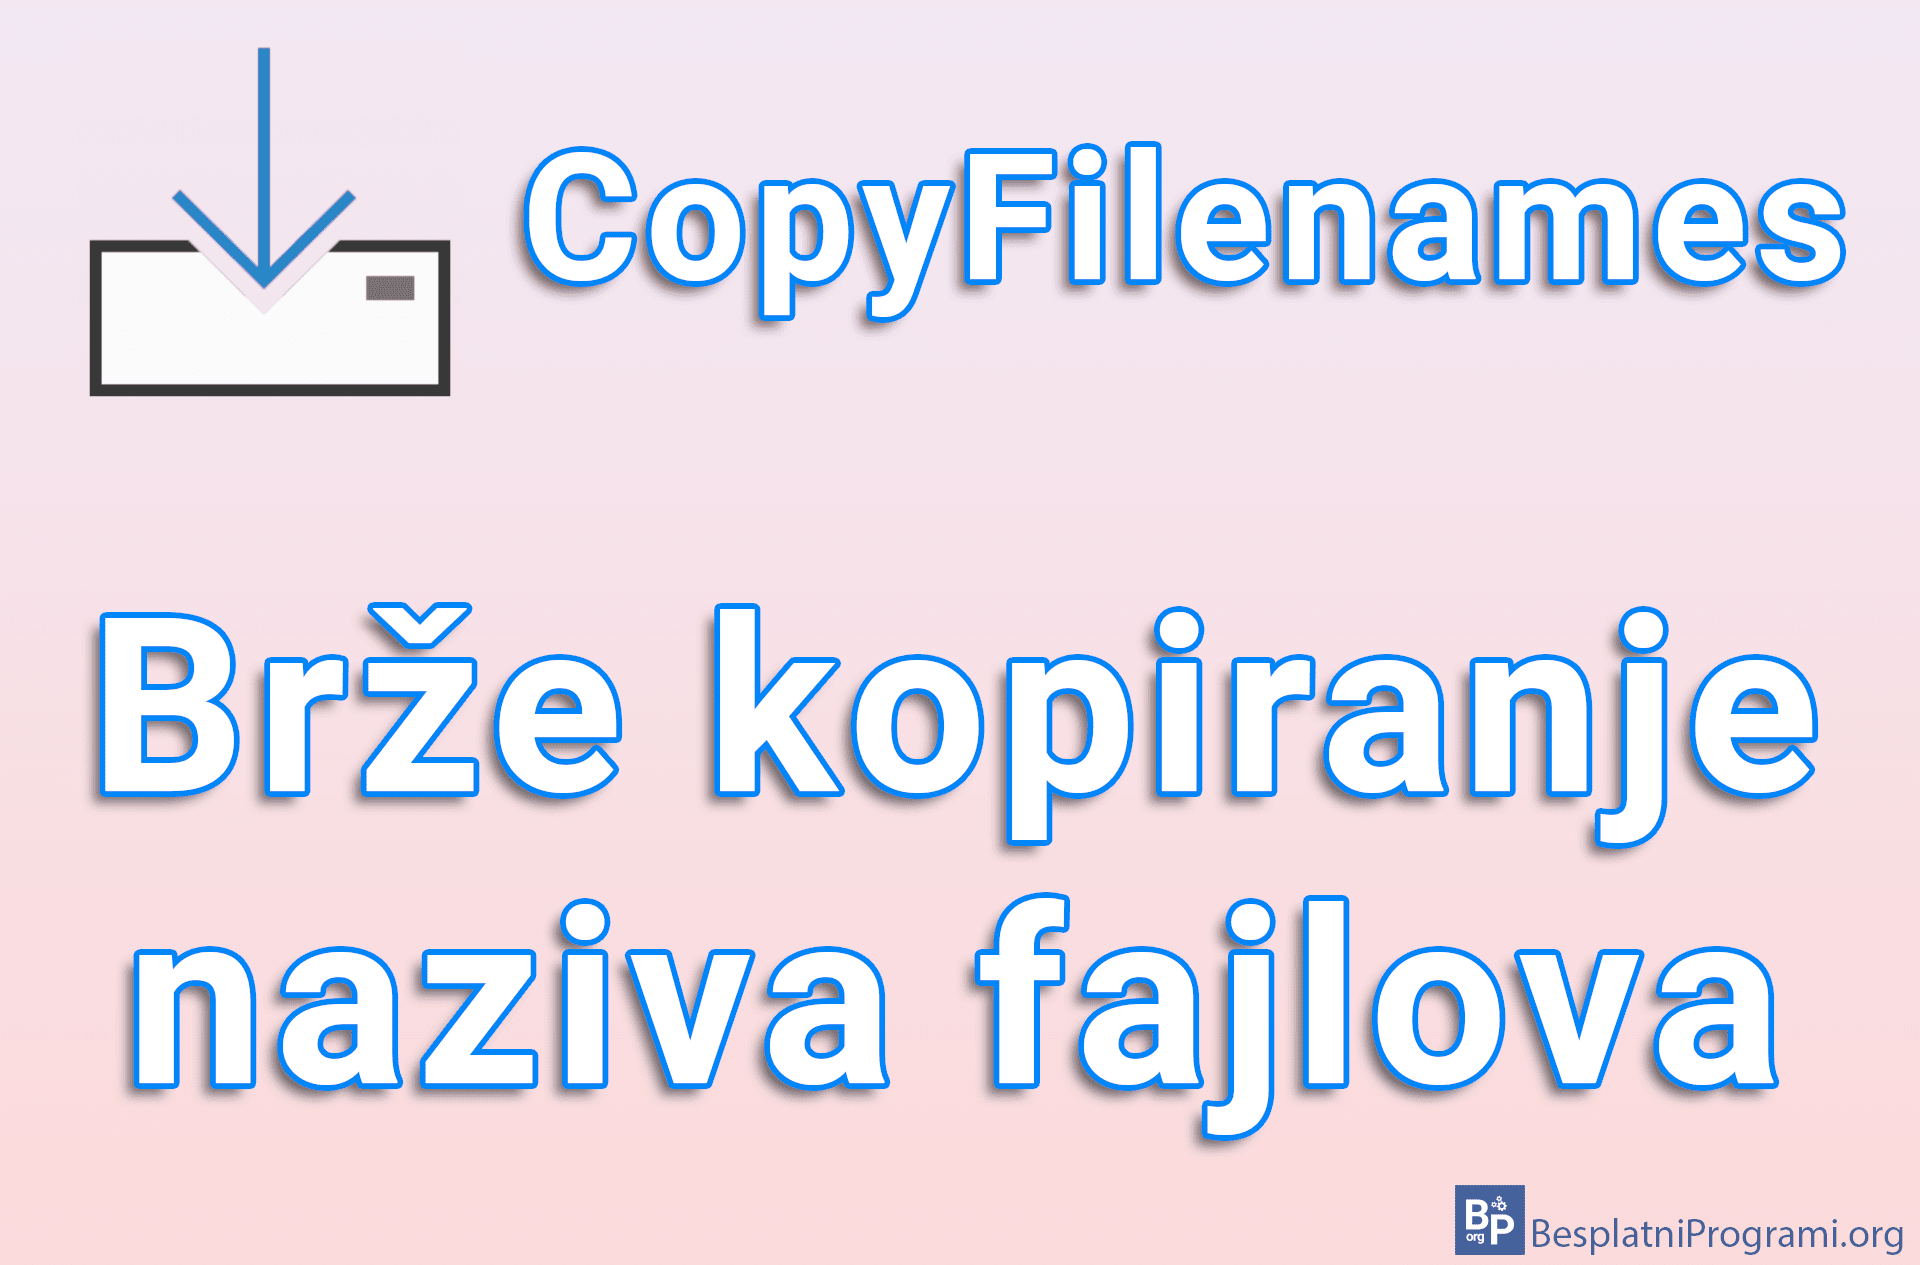 CopyFilenames - Brže kopiranje naziva fajlova